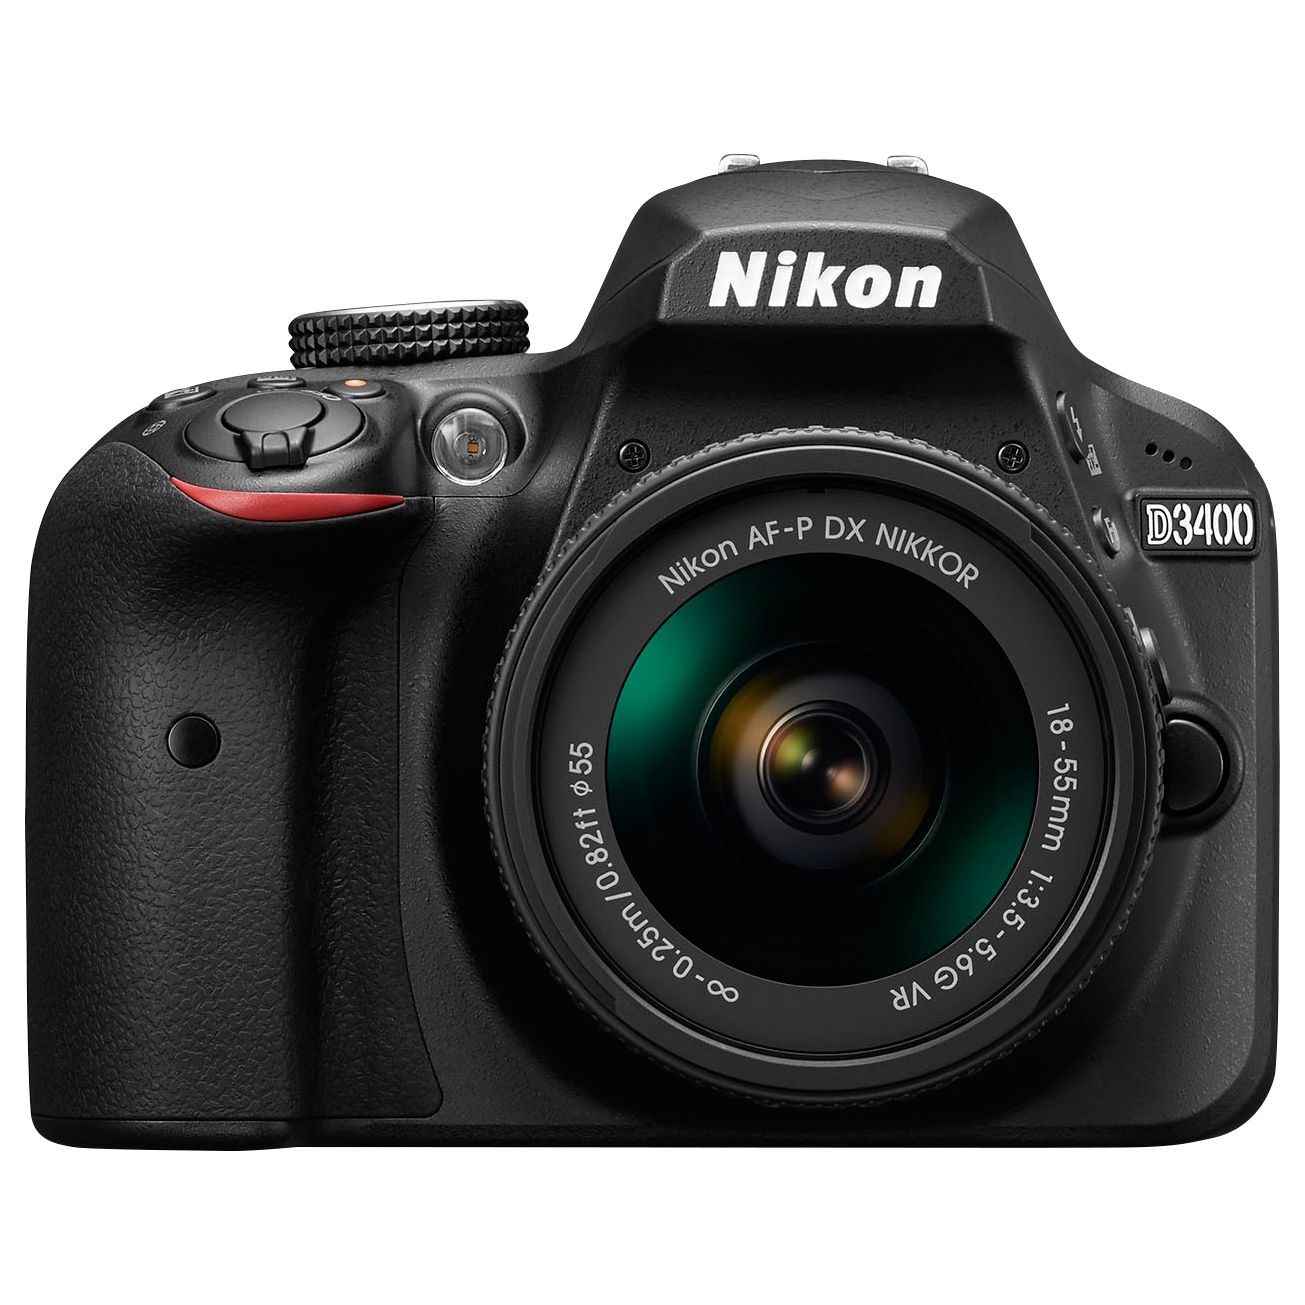 Nikon D3400 Digital SLR Camera with 18-55mm VR Lens, HD 1080p, 24.2MP, Optical ViewFinder, 3" LCD Monitor, Black